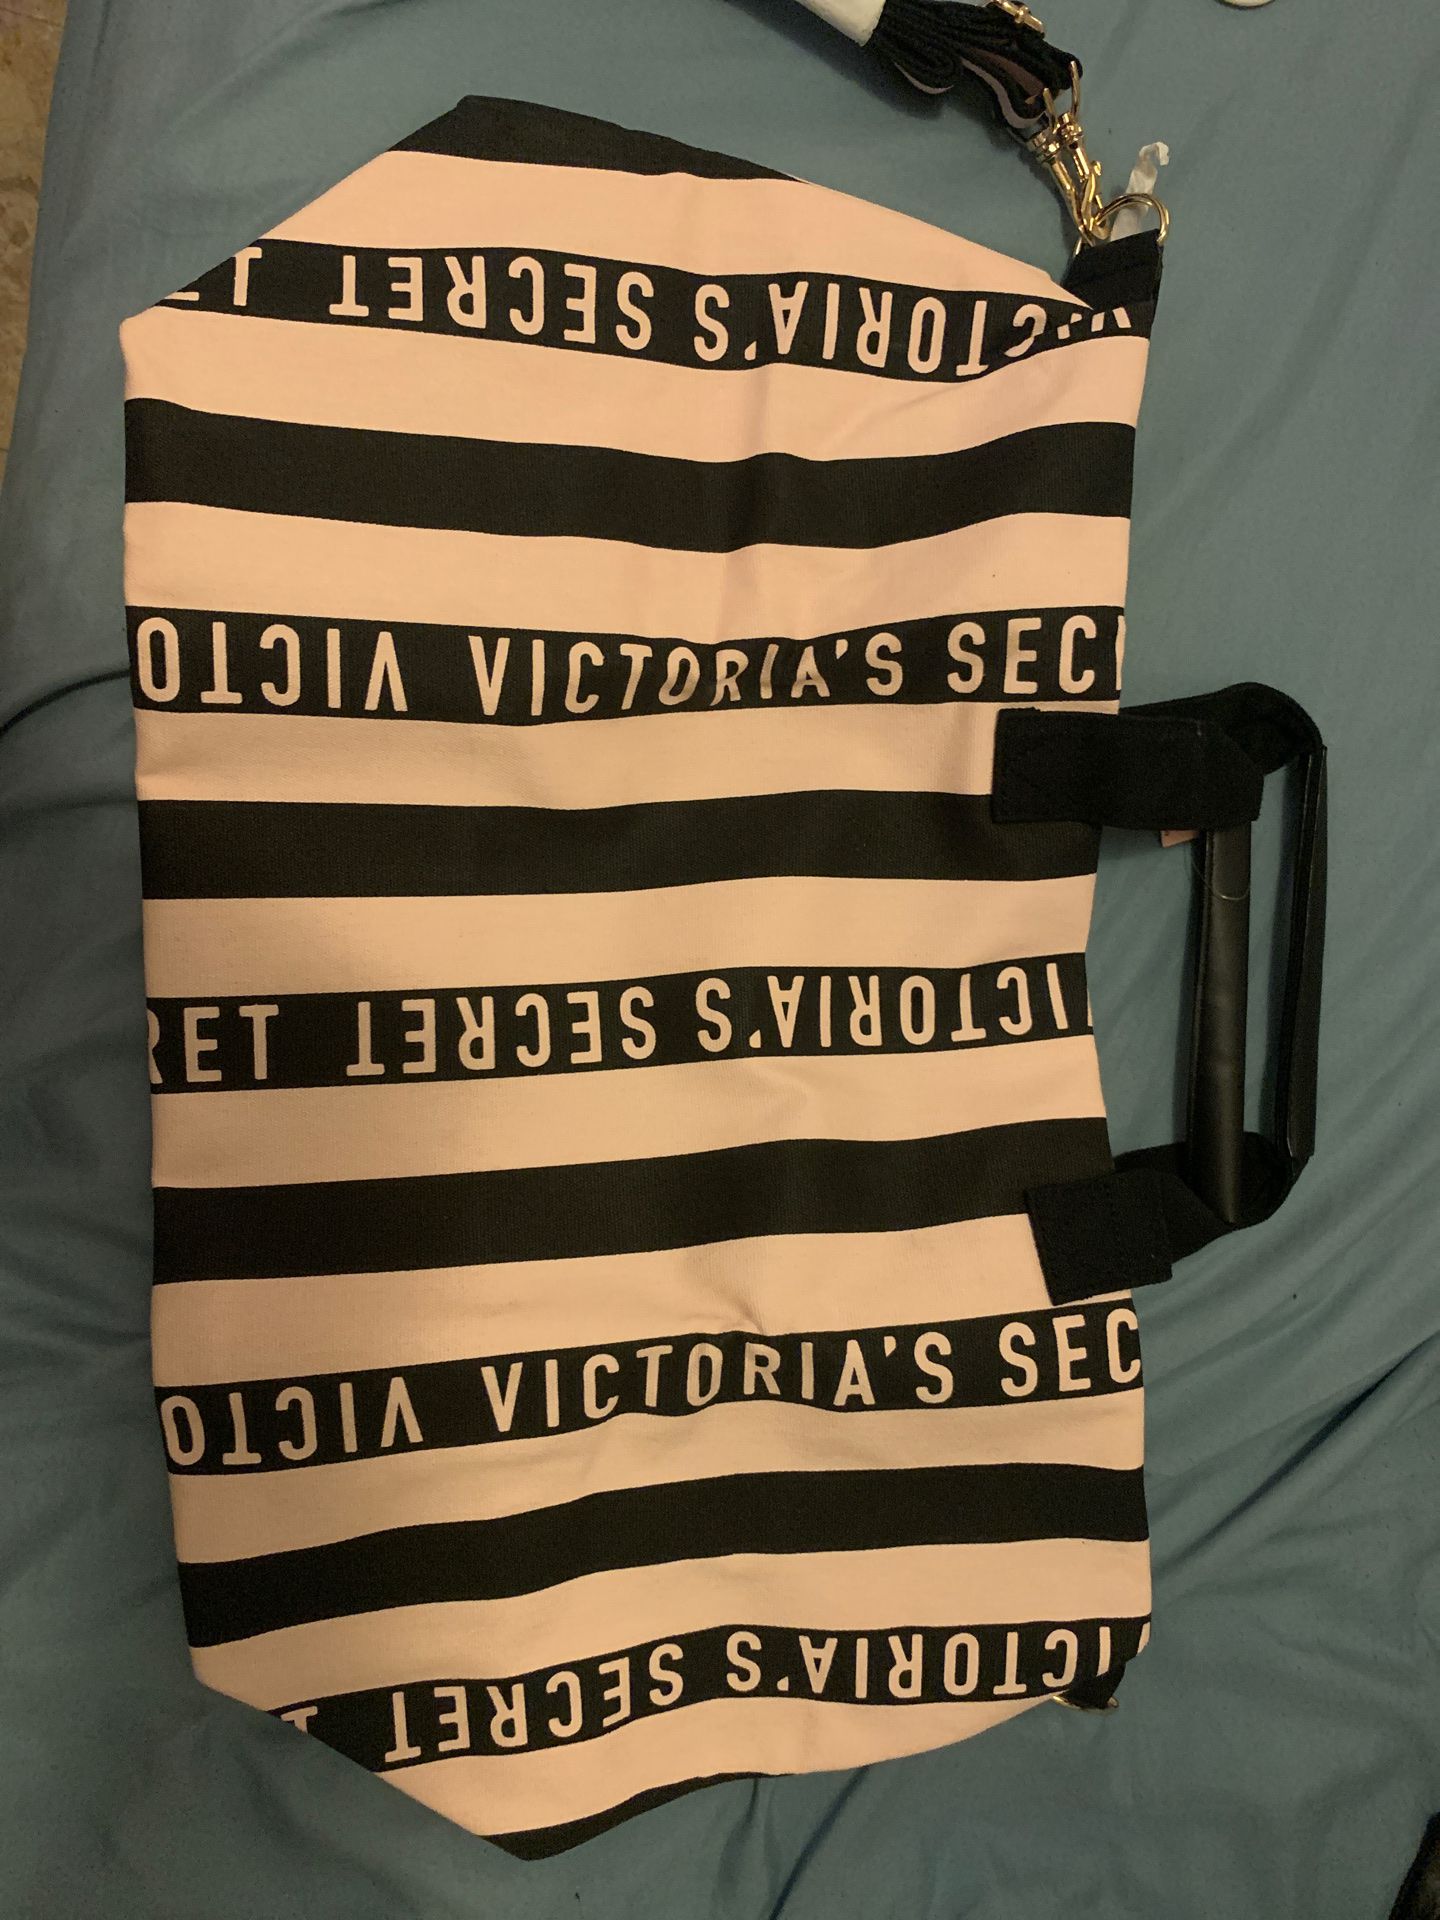 Brand new Victoria secret bag